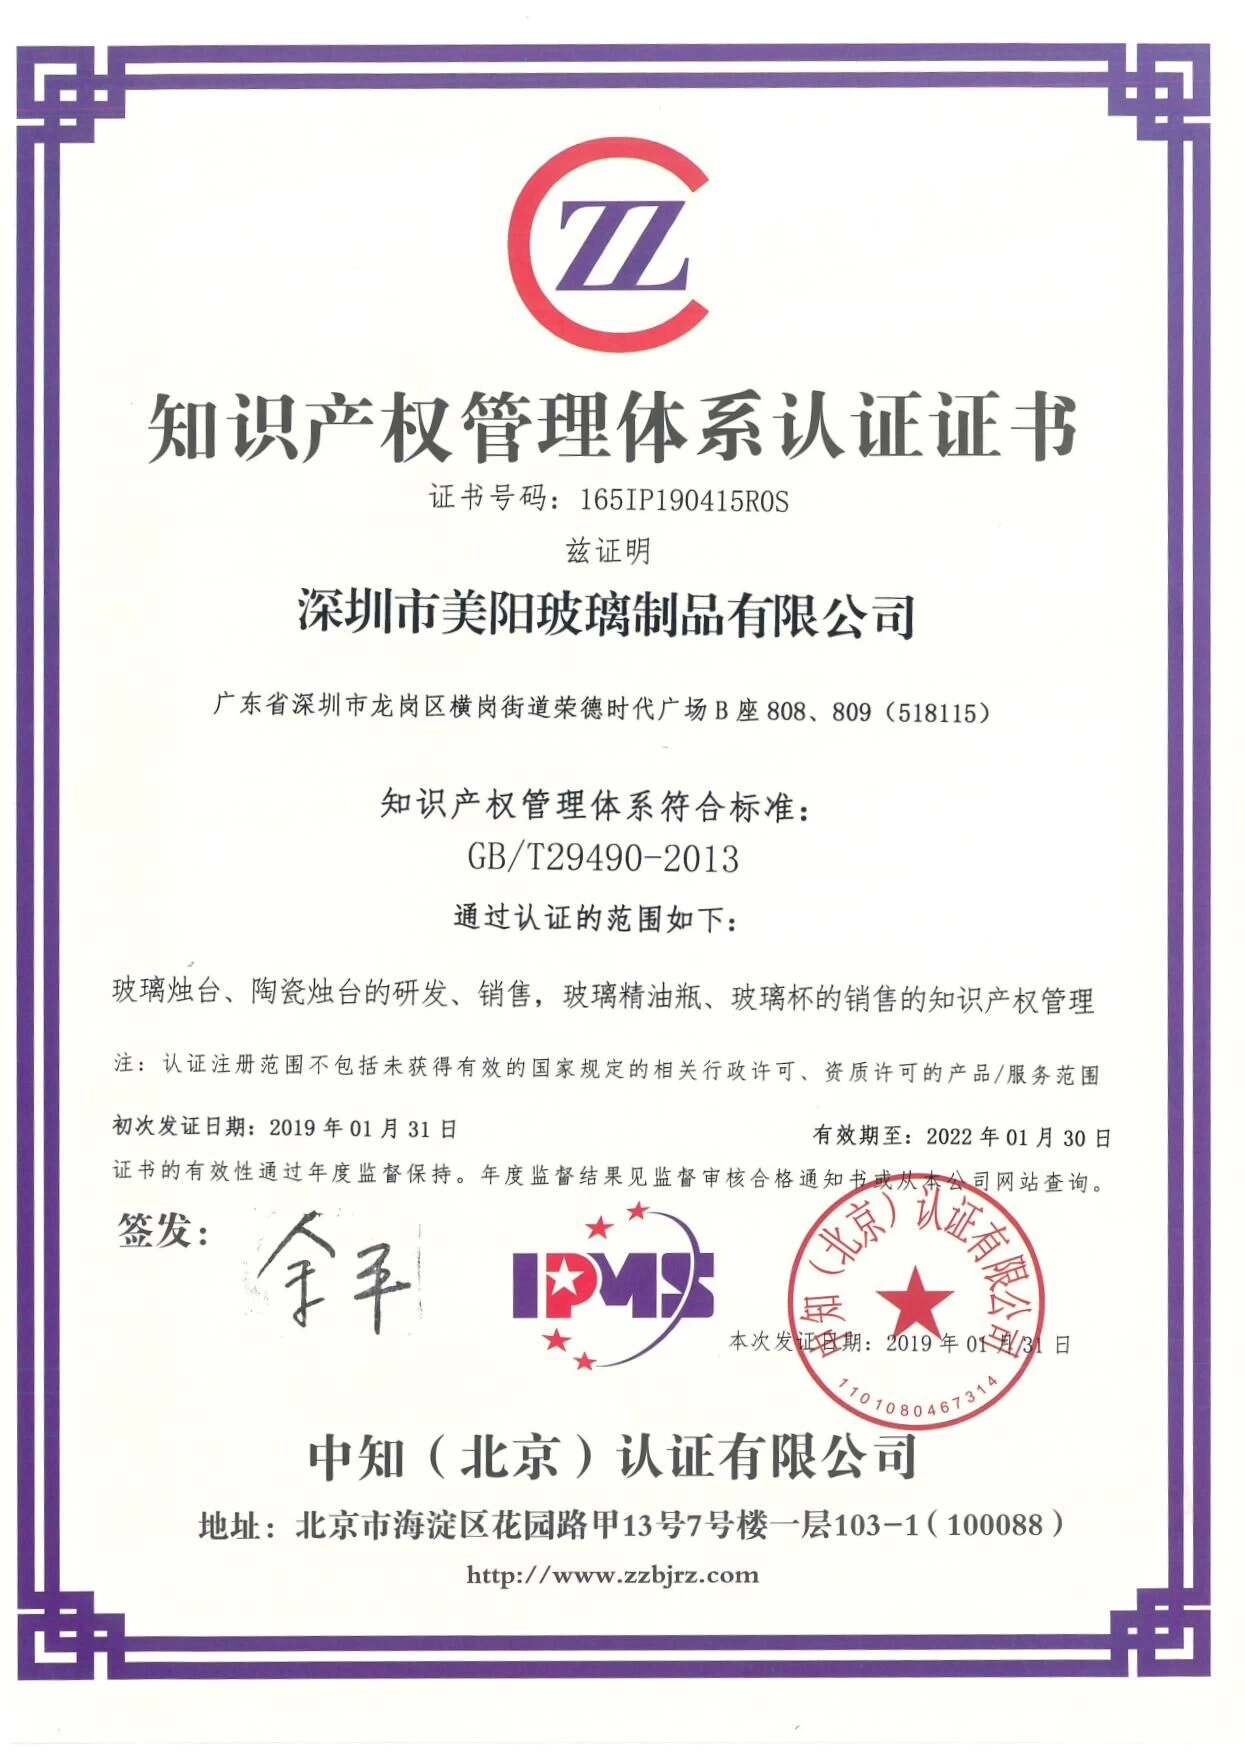 GB/T29490-2013 enterprise intellectual property management system certification